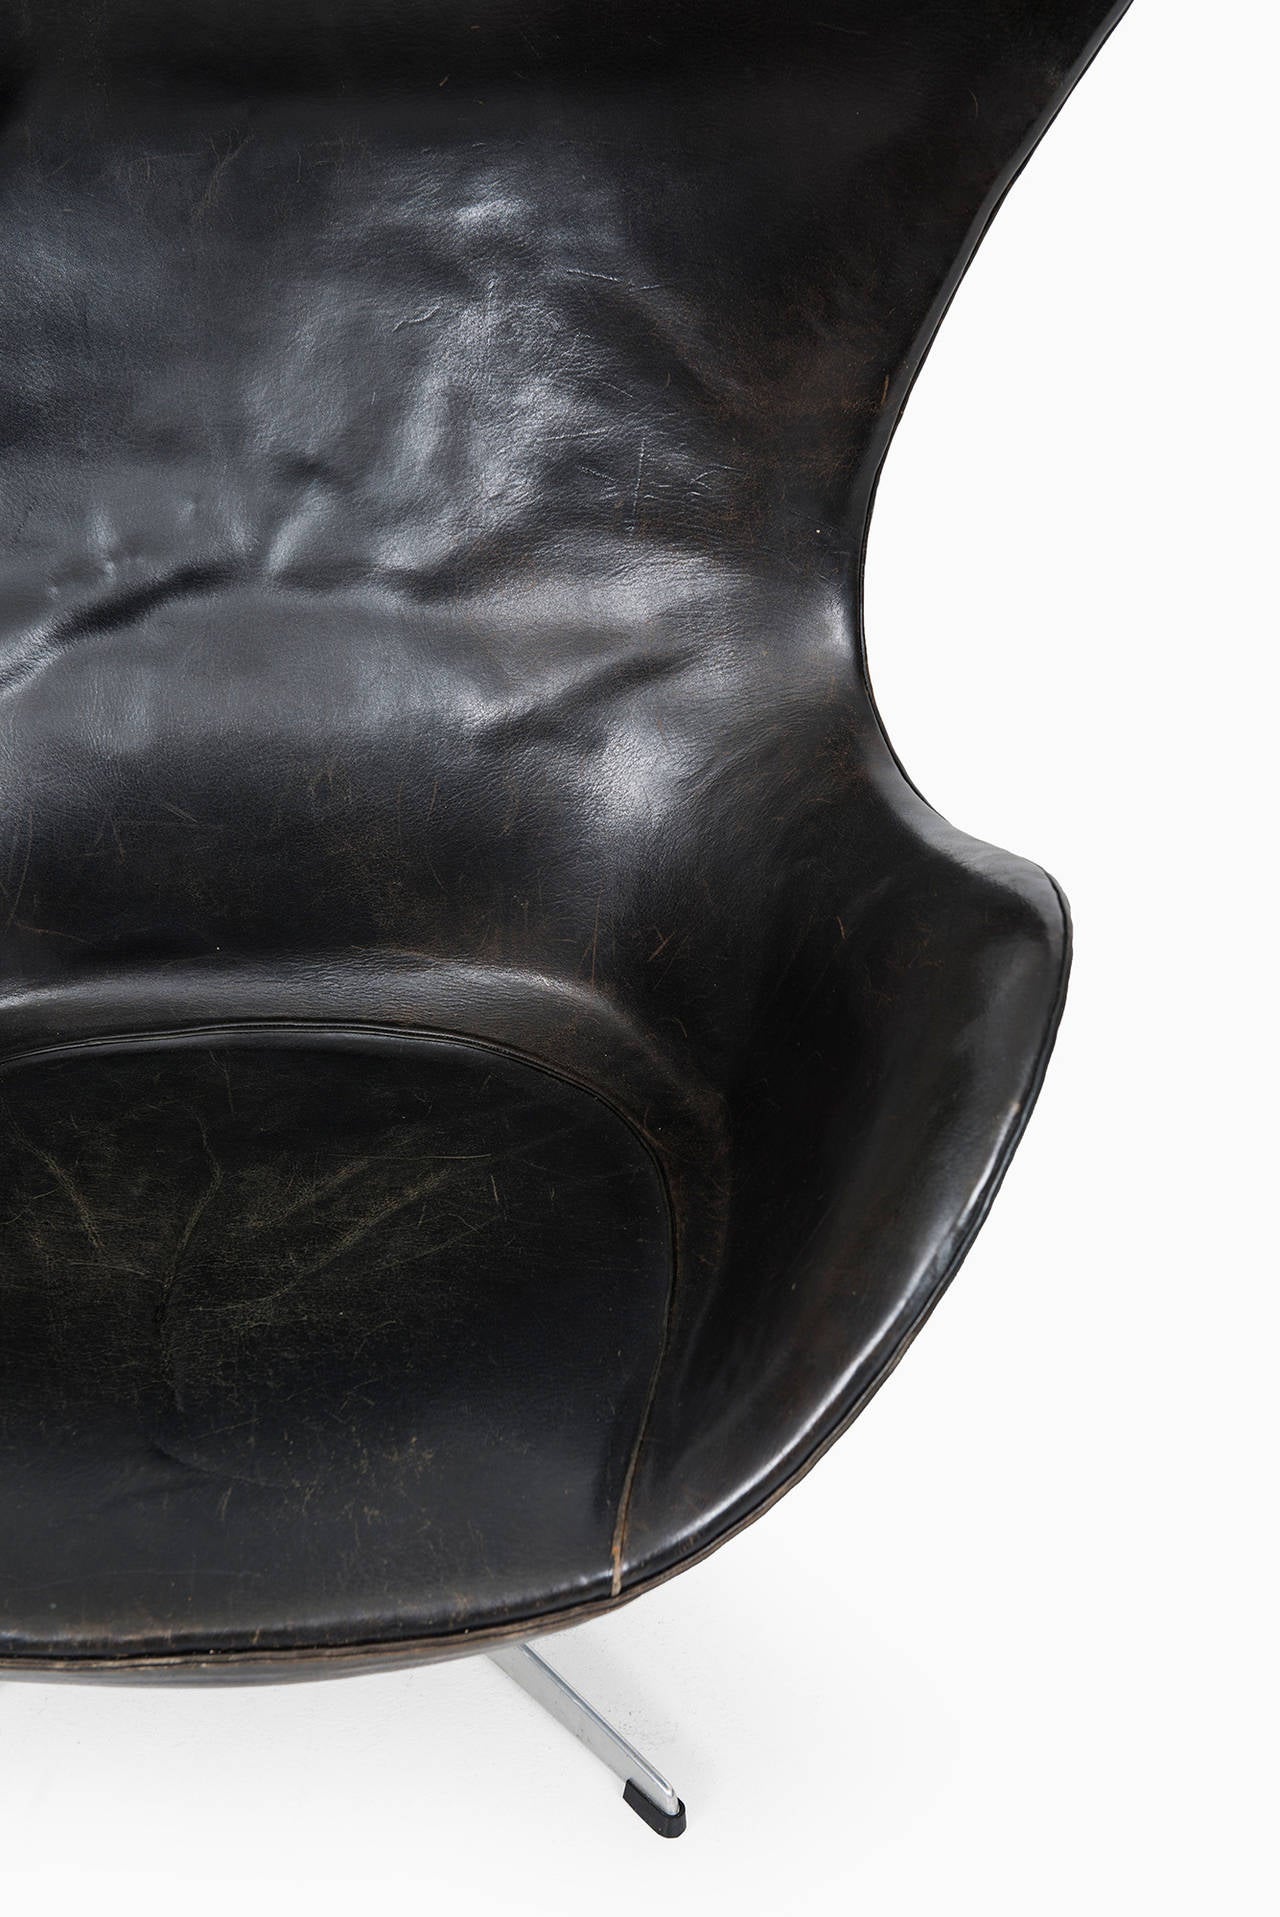 Danish Arne Jacobsen Early Egg Chair in Original Black Leather by Fritz Hansen